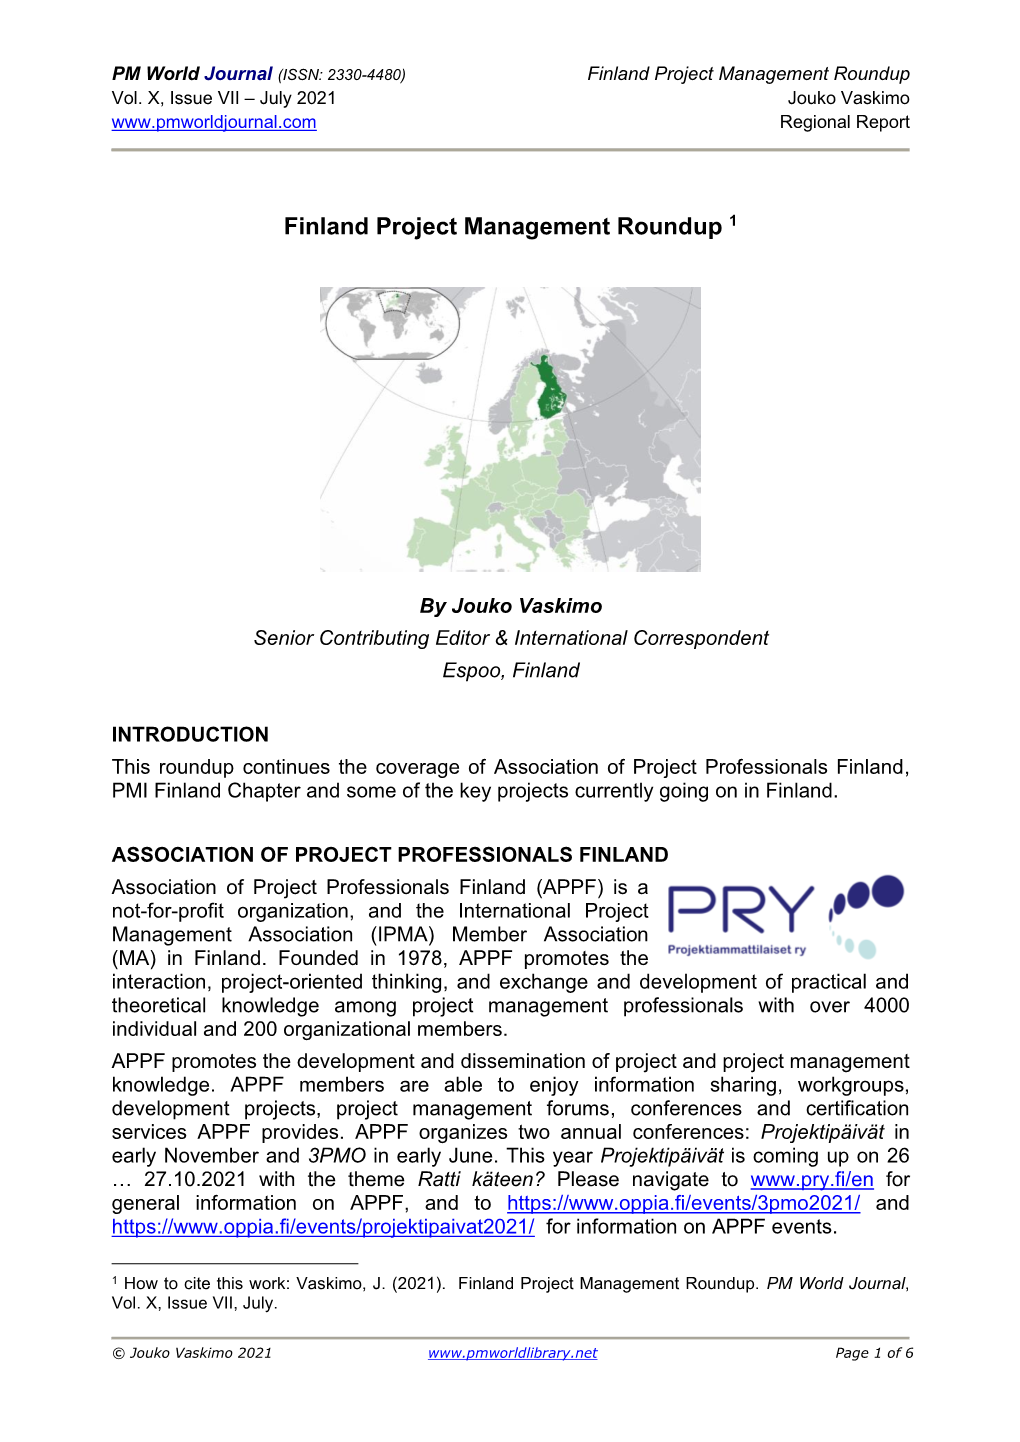 Finland Project Management Roundup Vol